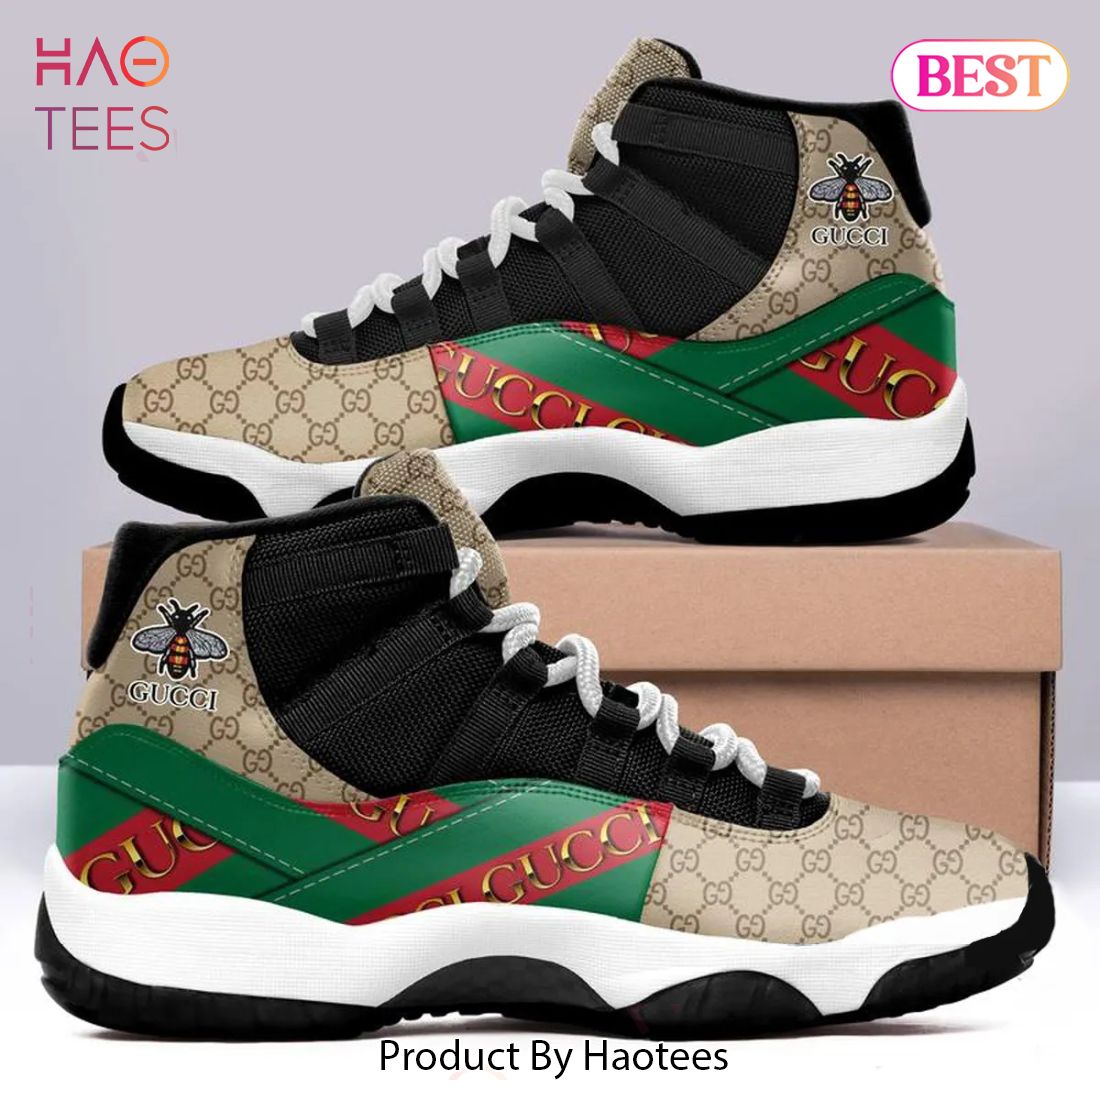 [NEW FASHION] Luxury Gucci Bee Air Jordan 11 Shoes Hot 2023 Gucci Sneakers Gifts For Men Women